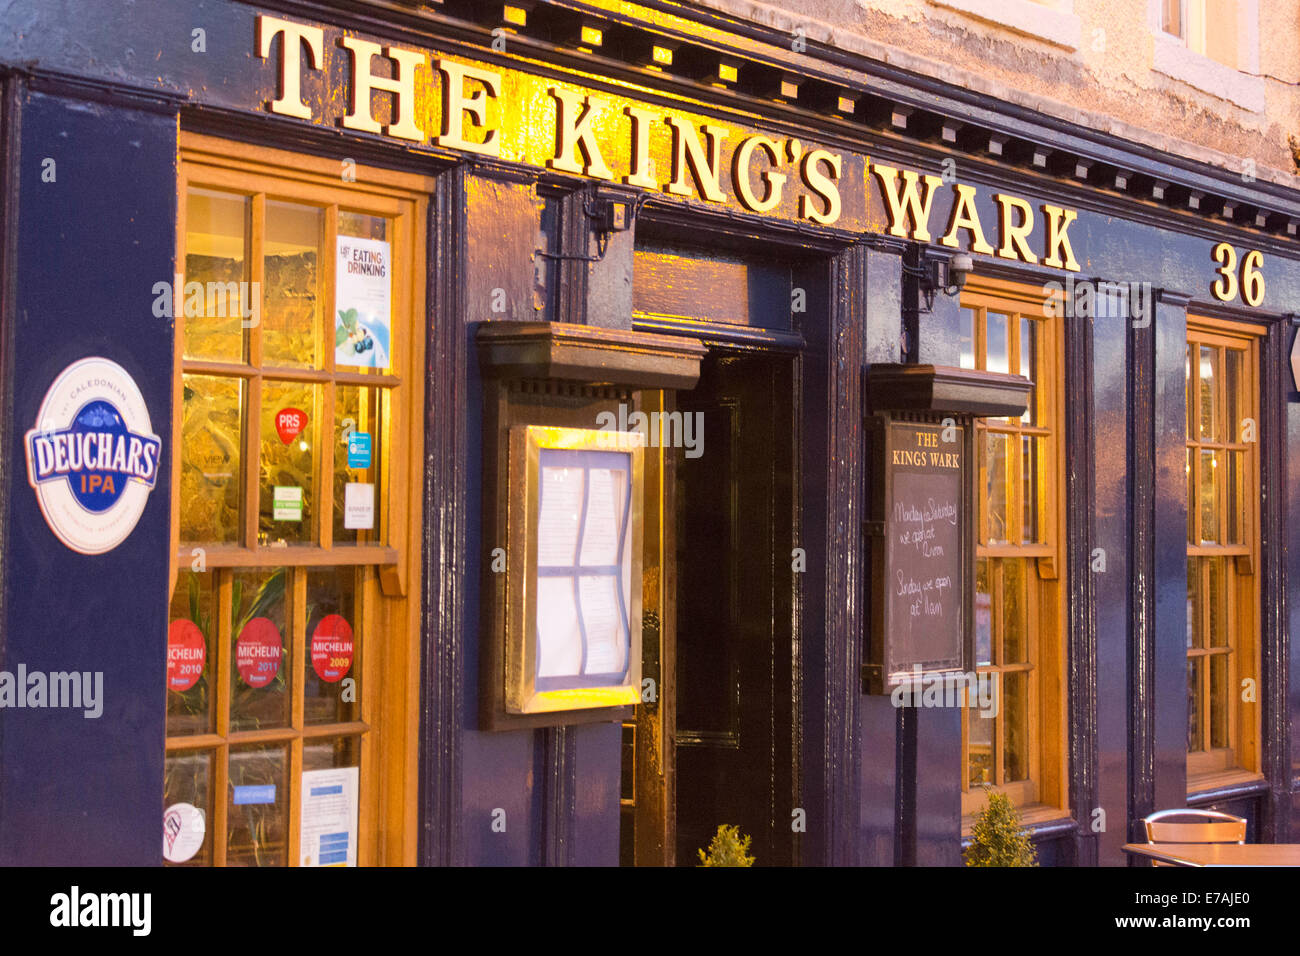 historischen Pub "The King Wark" in Edinburgh-Leith, Foto: Robert B. Fishman, Ecomedia, 31.10.2012 Stockfoto